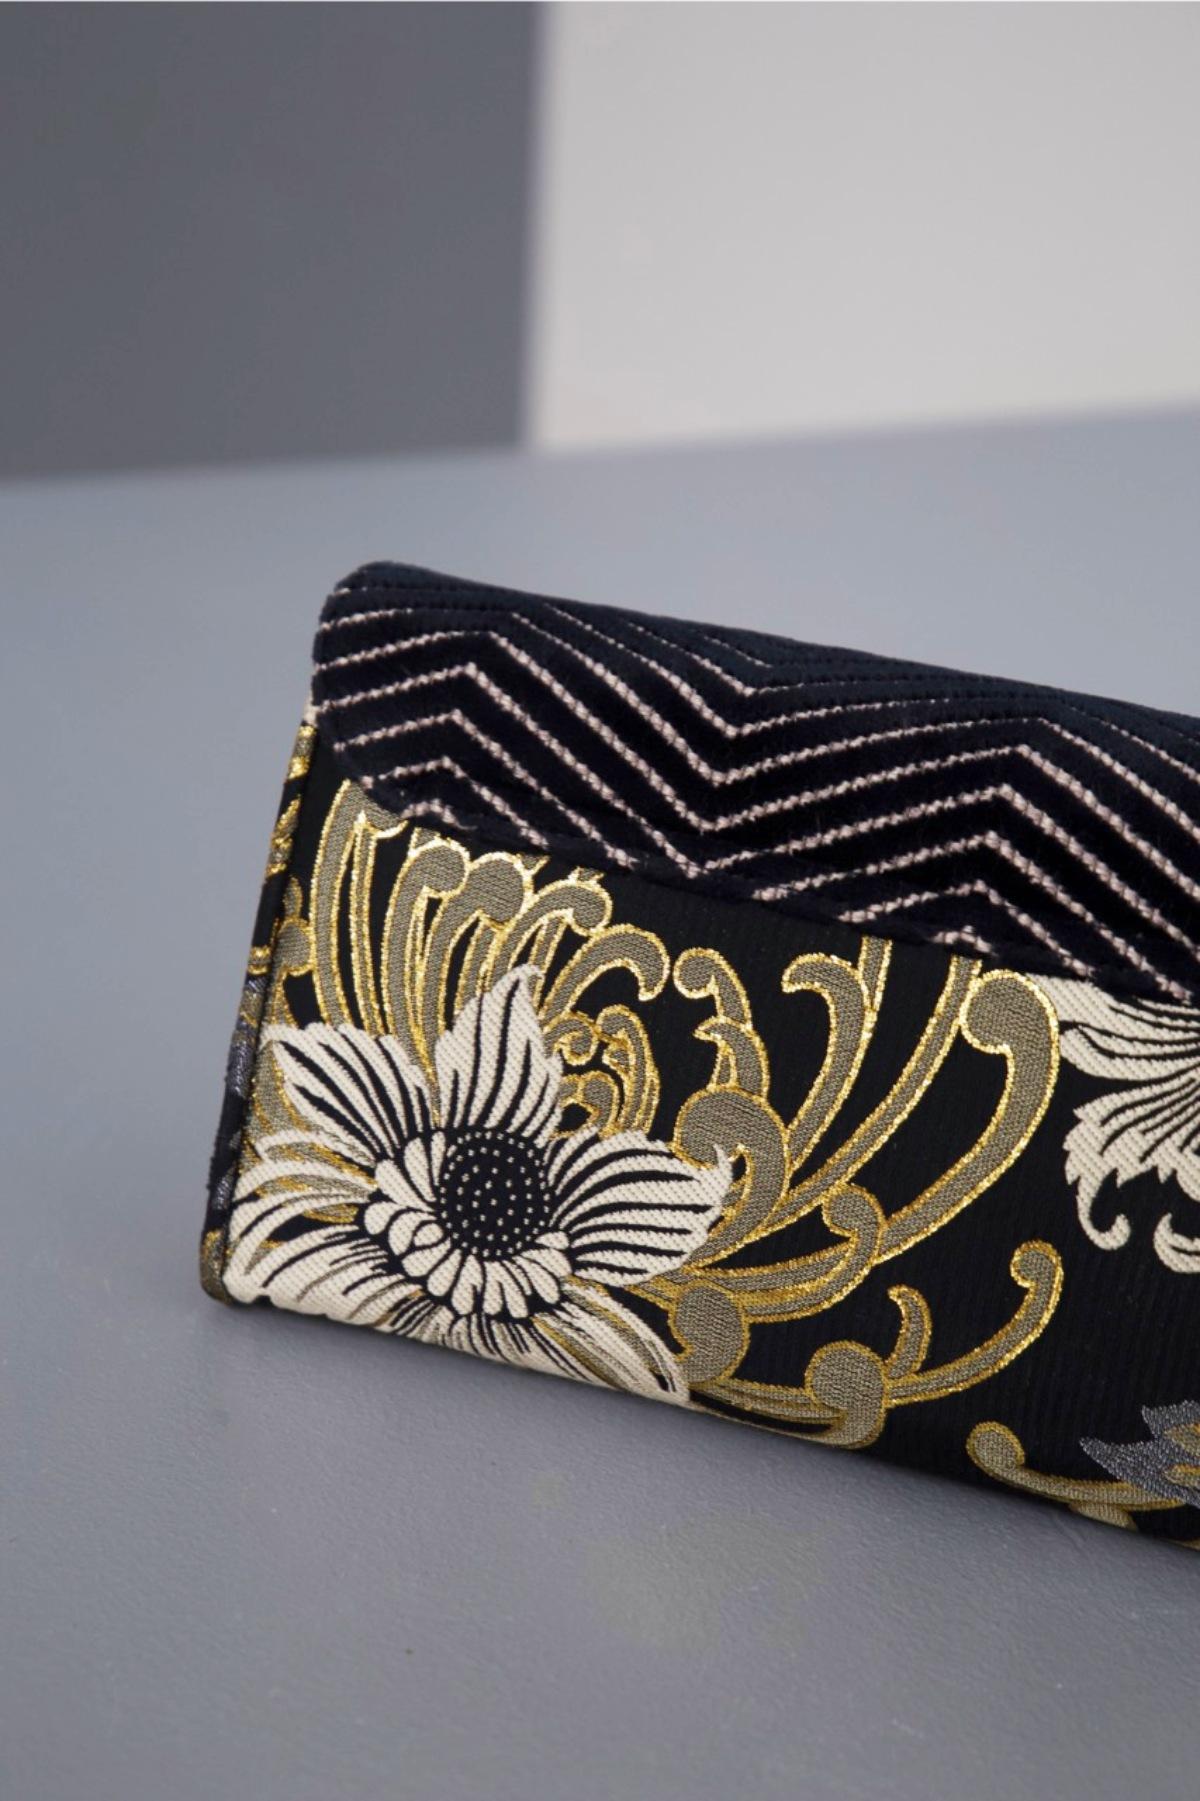 Bulgari Women's Clutch Bag with Golden Floral Details 3